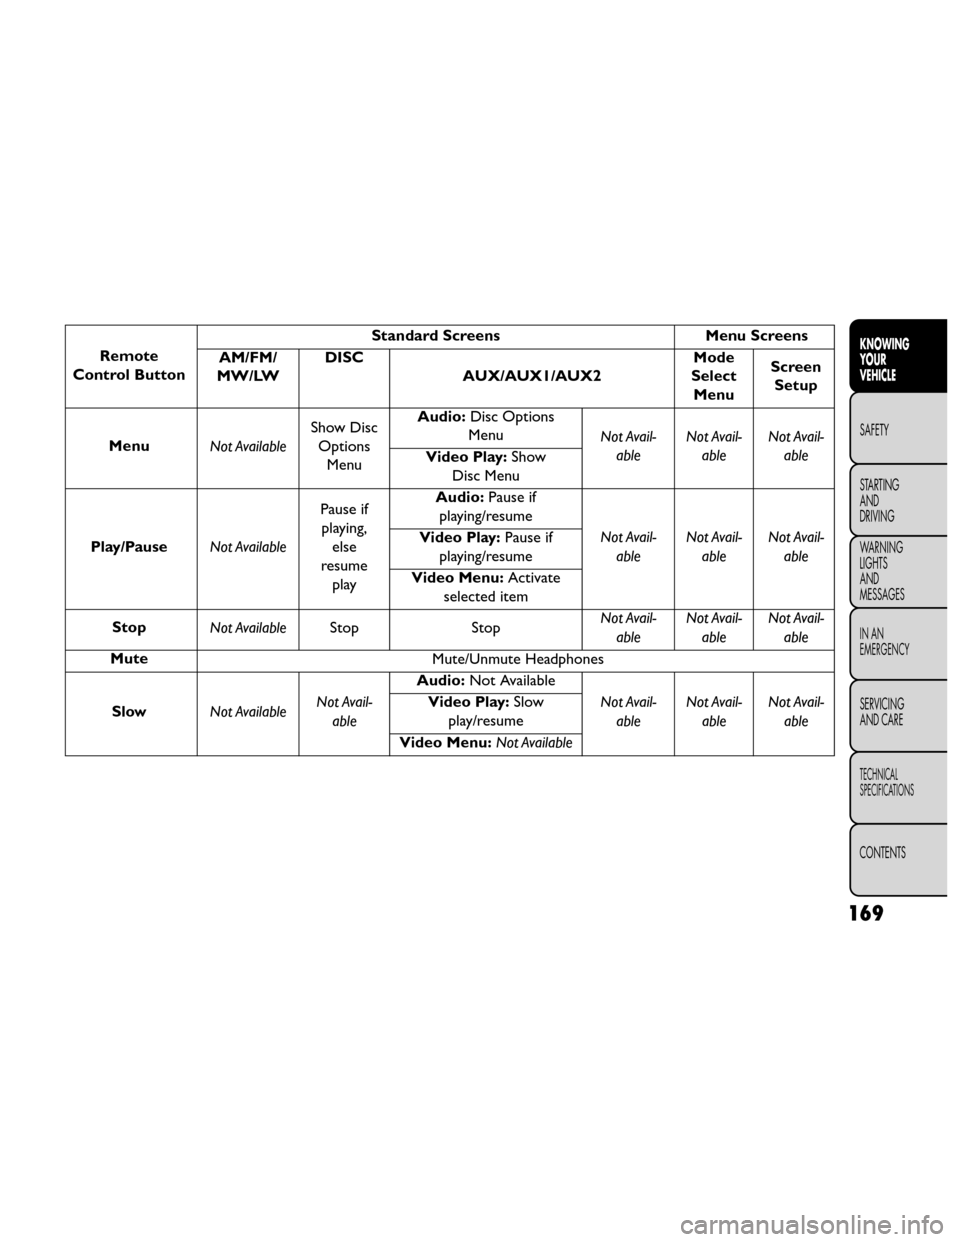 FIAT FREEMONT 2014 1.G Owners Manual Remote
Control Button Standard Screens
Menu Screens
AM/FM/
MW/LW DISC
AUX/AUX1/AUX2 Mode
Select Menu Screen
Setup
Menu Not AvailableShow Disc
Options Menu Audio:
Disc Options
Menu Not Avail-
able Not 